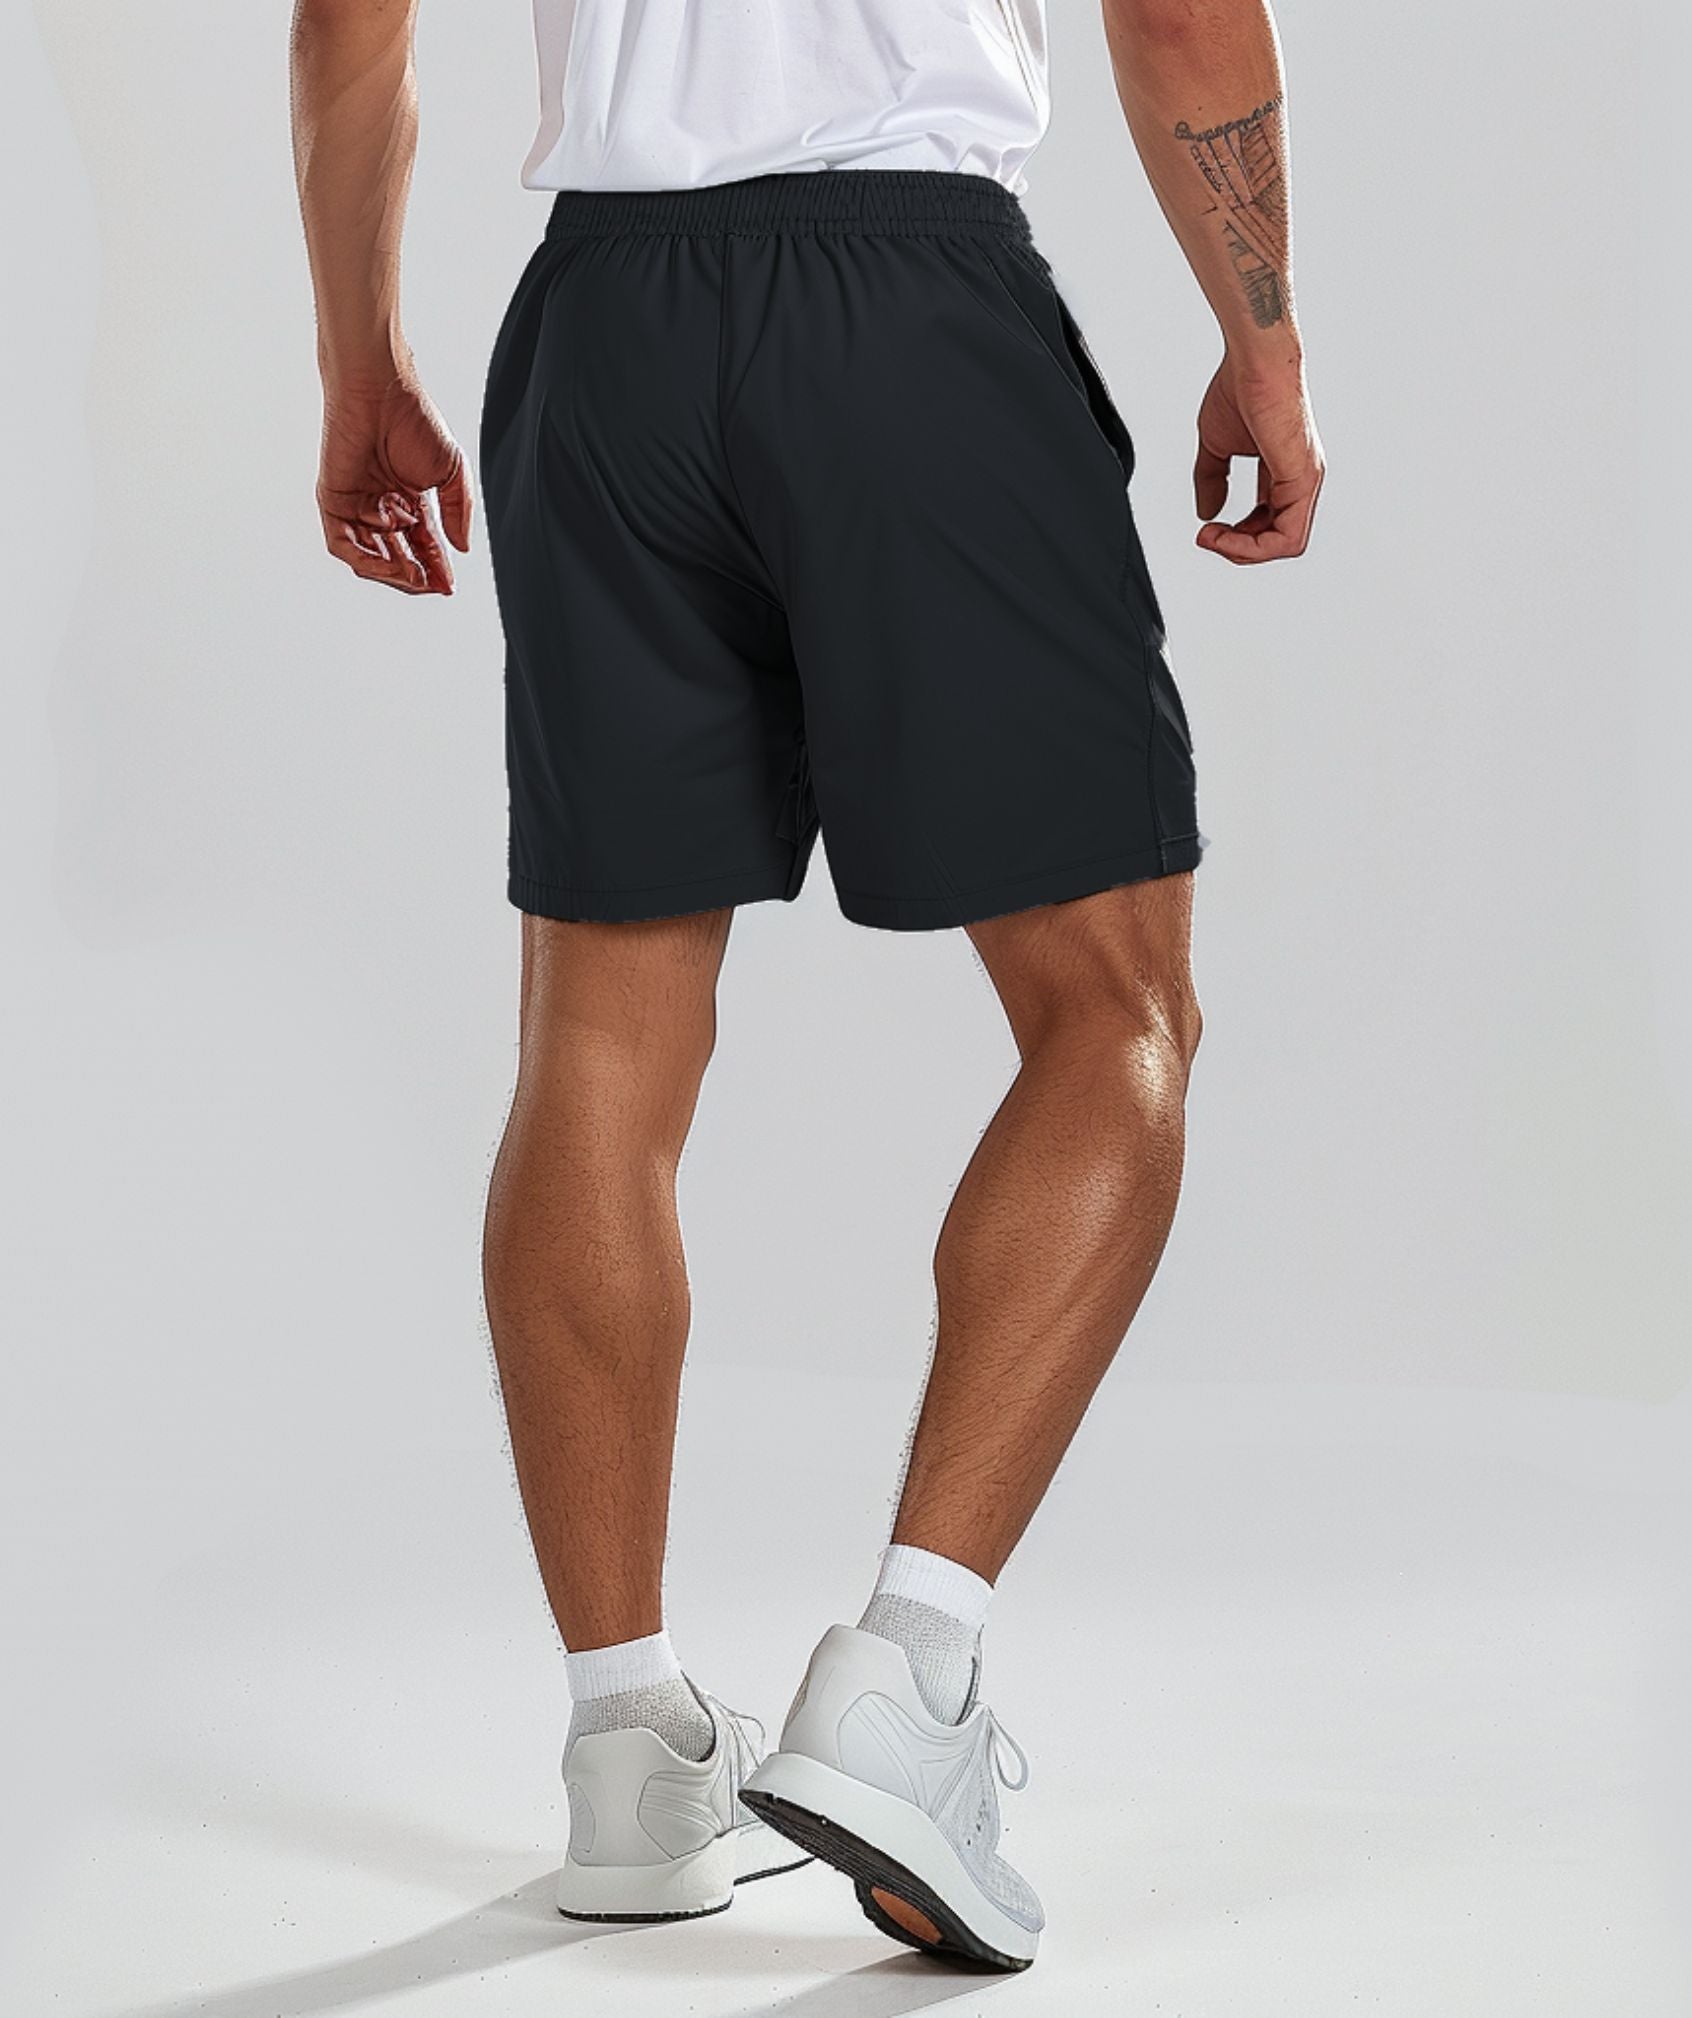 Apex™ black Pinnacle Shorts back view - sustainable activewear